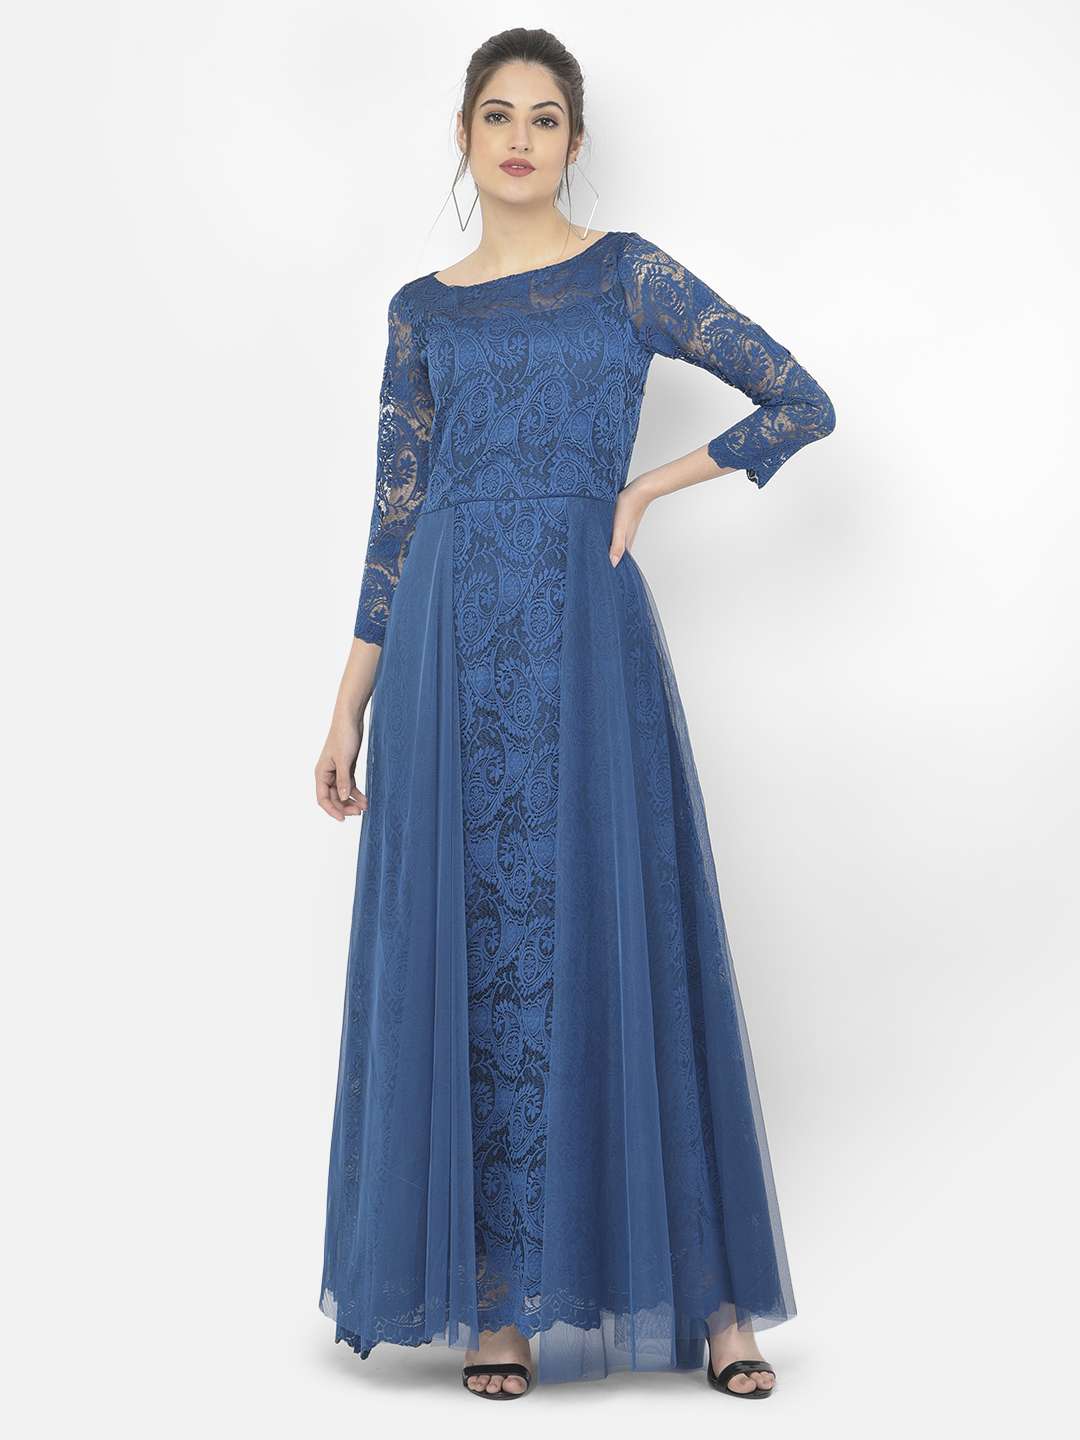 Shine Alert: Ananya Panday Slaying In A Blue Onepiece Dress, Looks Like A  Shining Diamond